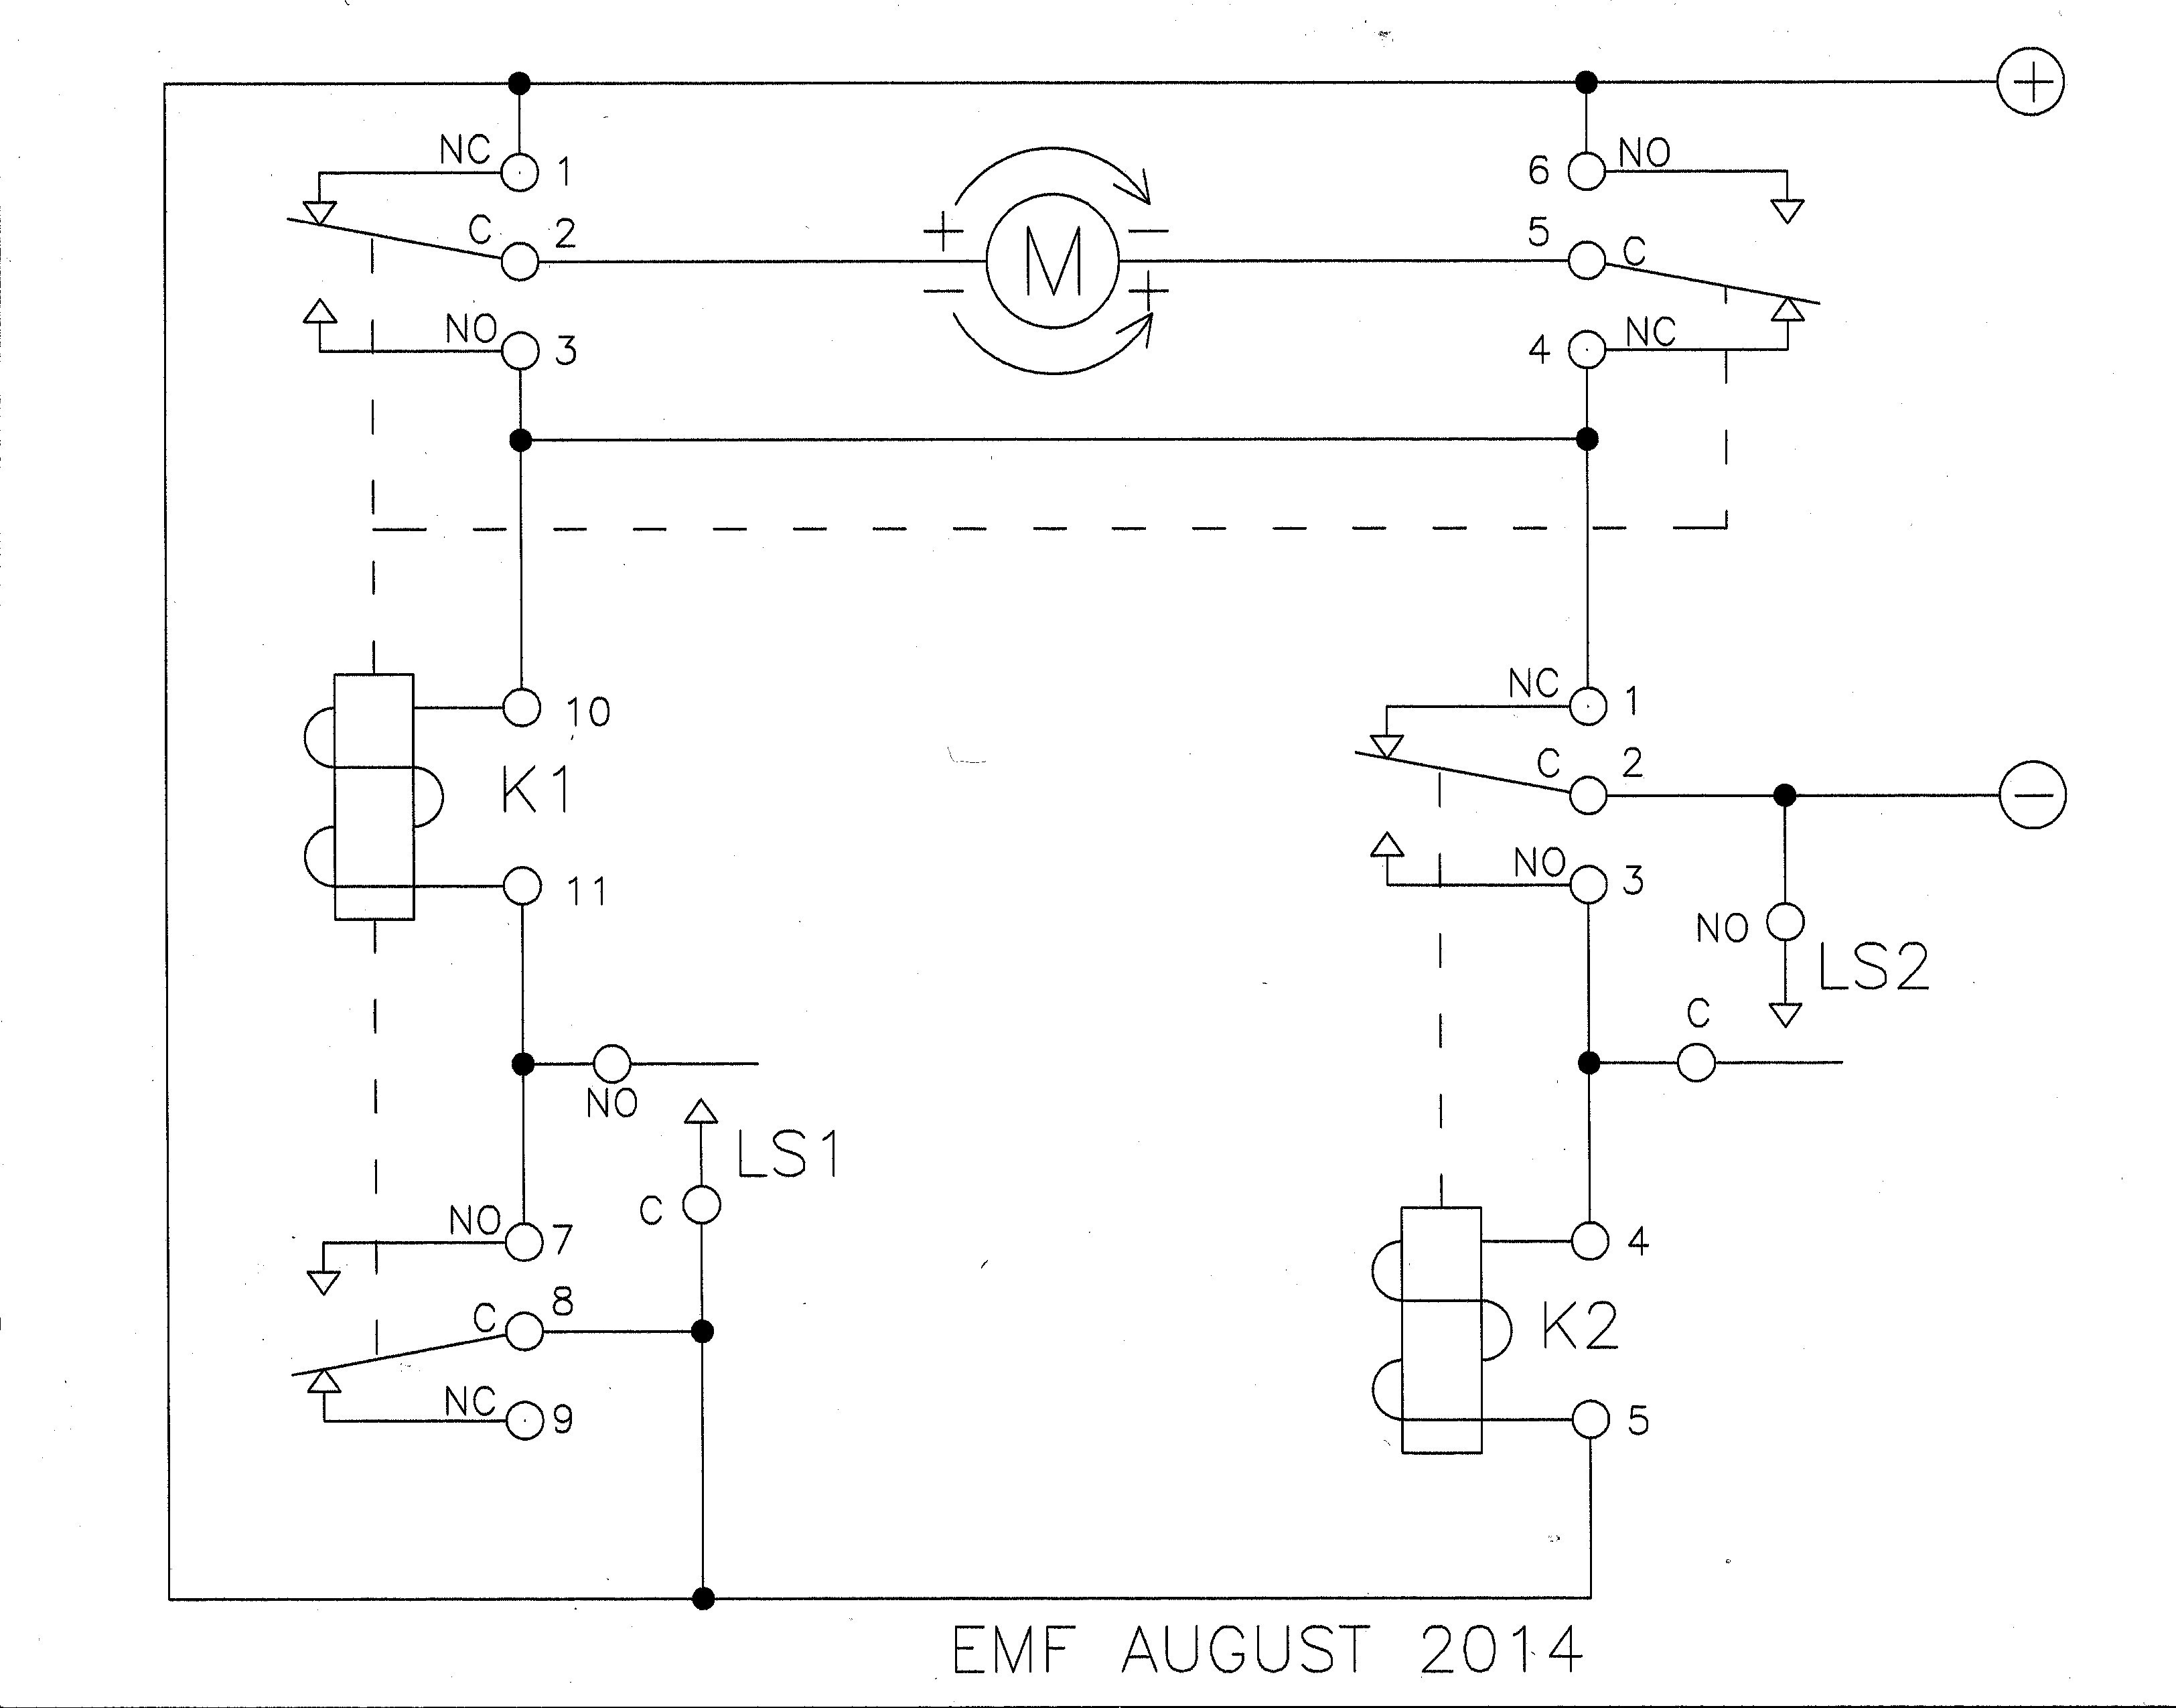 Dayton Time Delay Relay Wiring Diagram Wiring Diagram for Ac Electric Motor Fresh Wiring Diagram